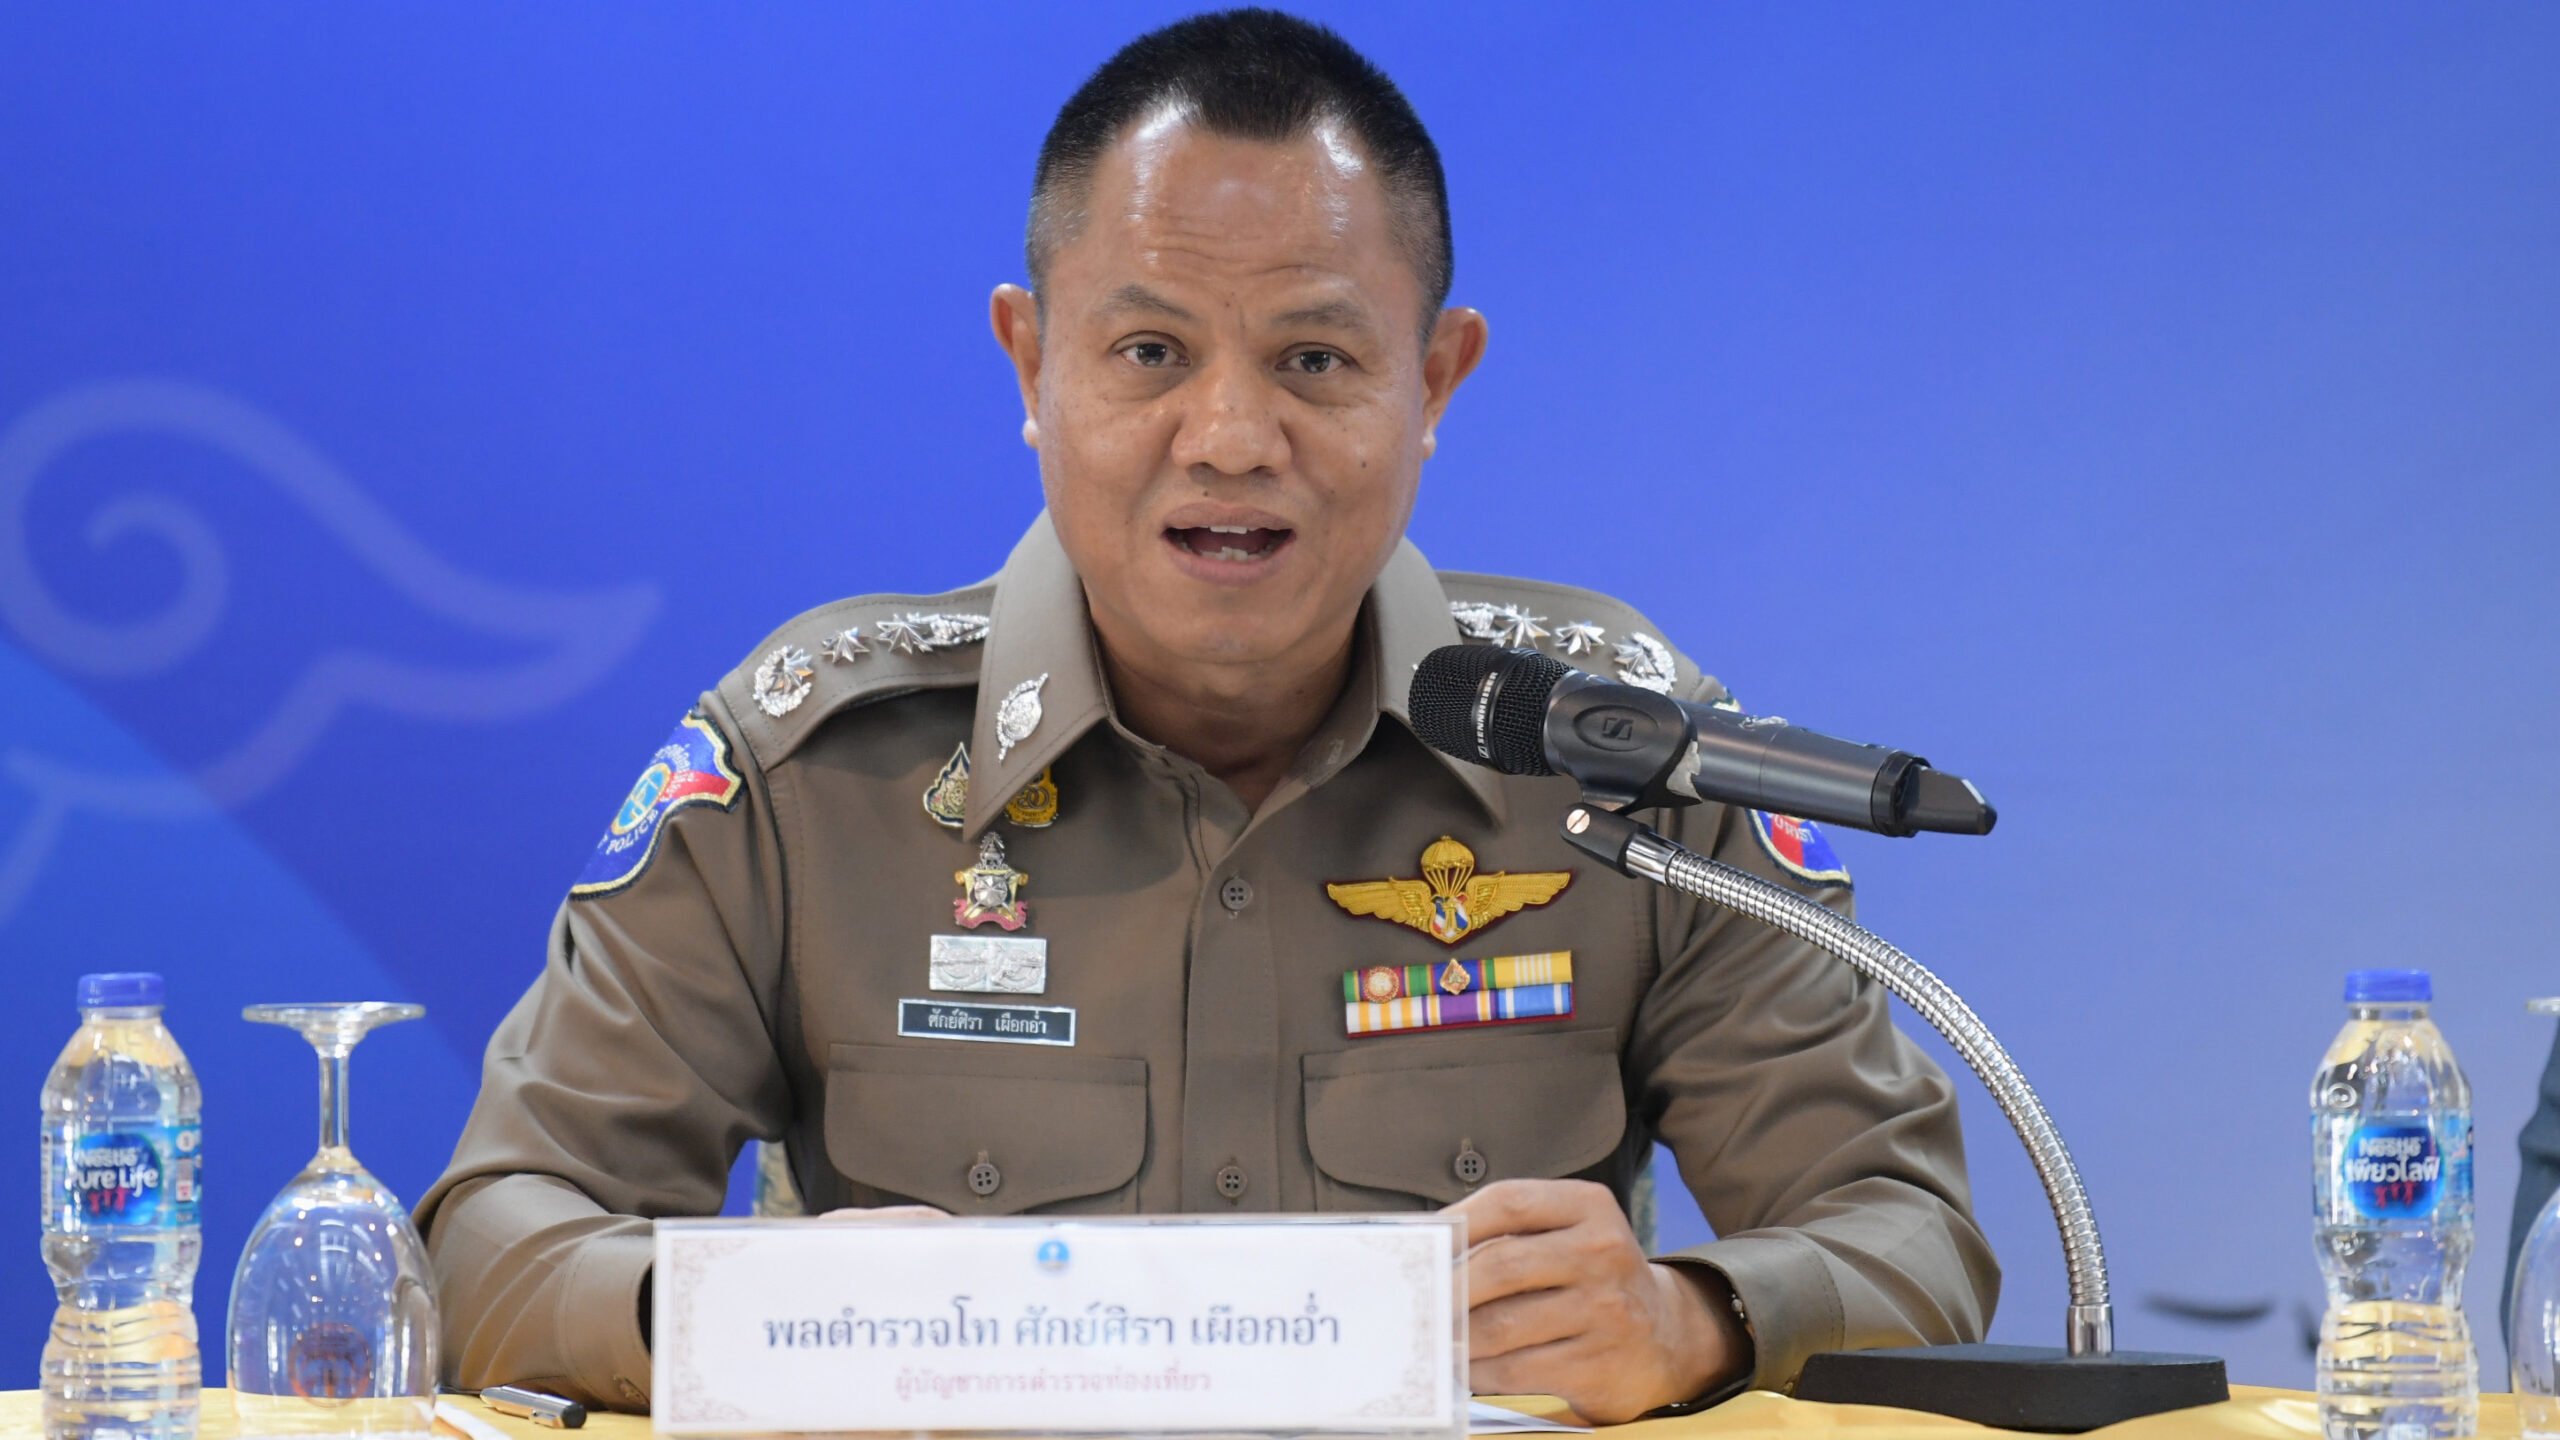 Pol. Lt. Gen. Saksira Pheuk-um, Commissioner of the Tourist Police